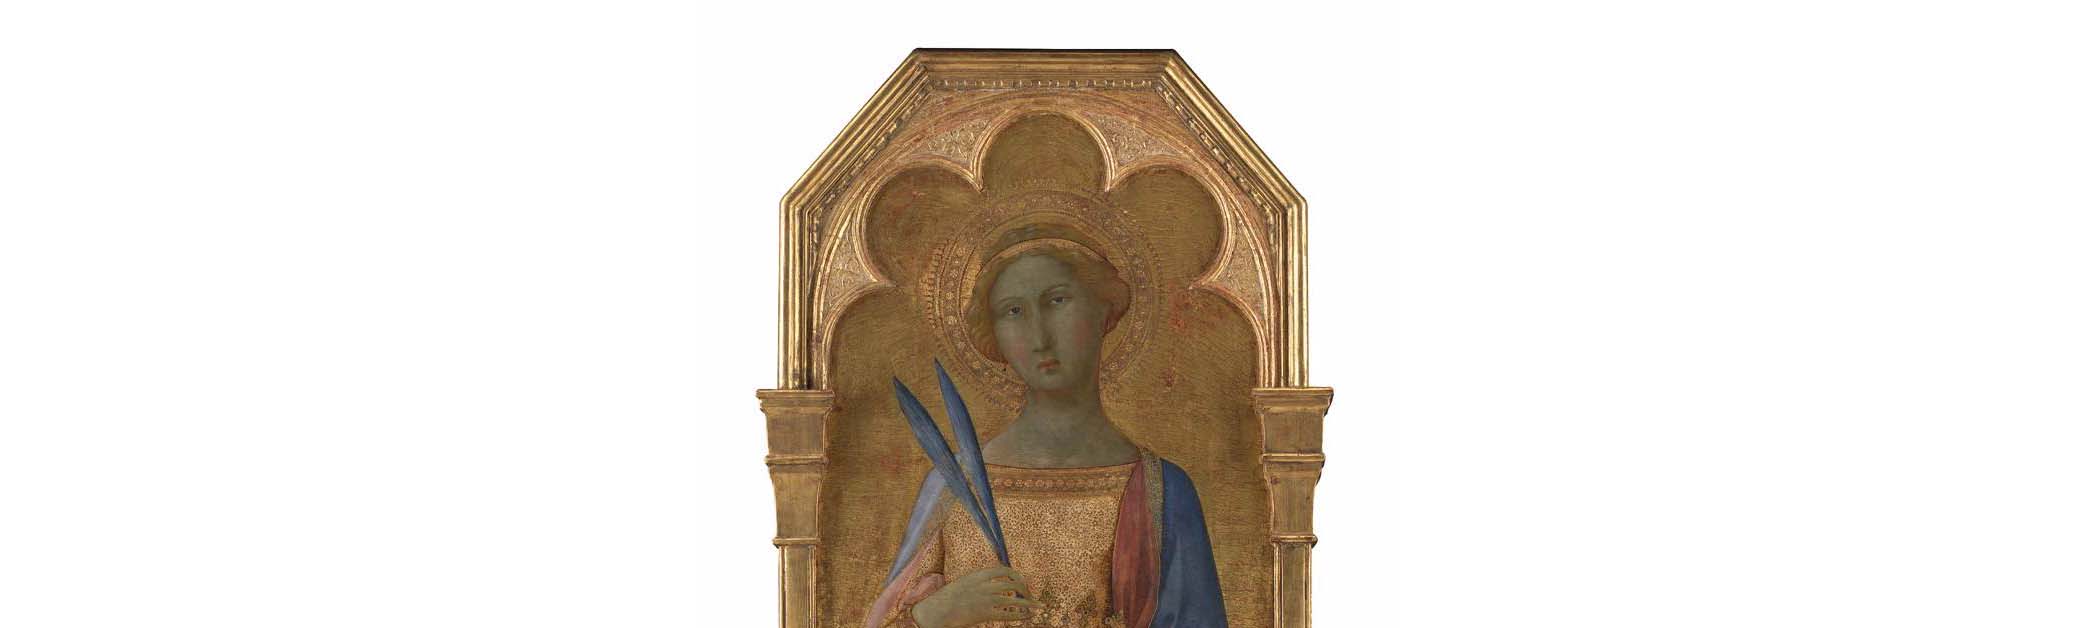 St. Corona by Master of Palazzo Venezia Madonna, c. 1350